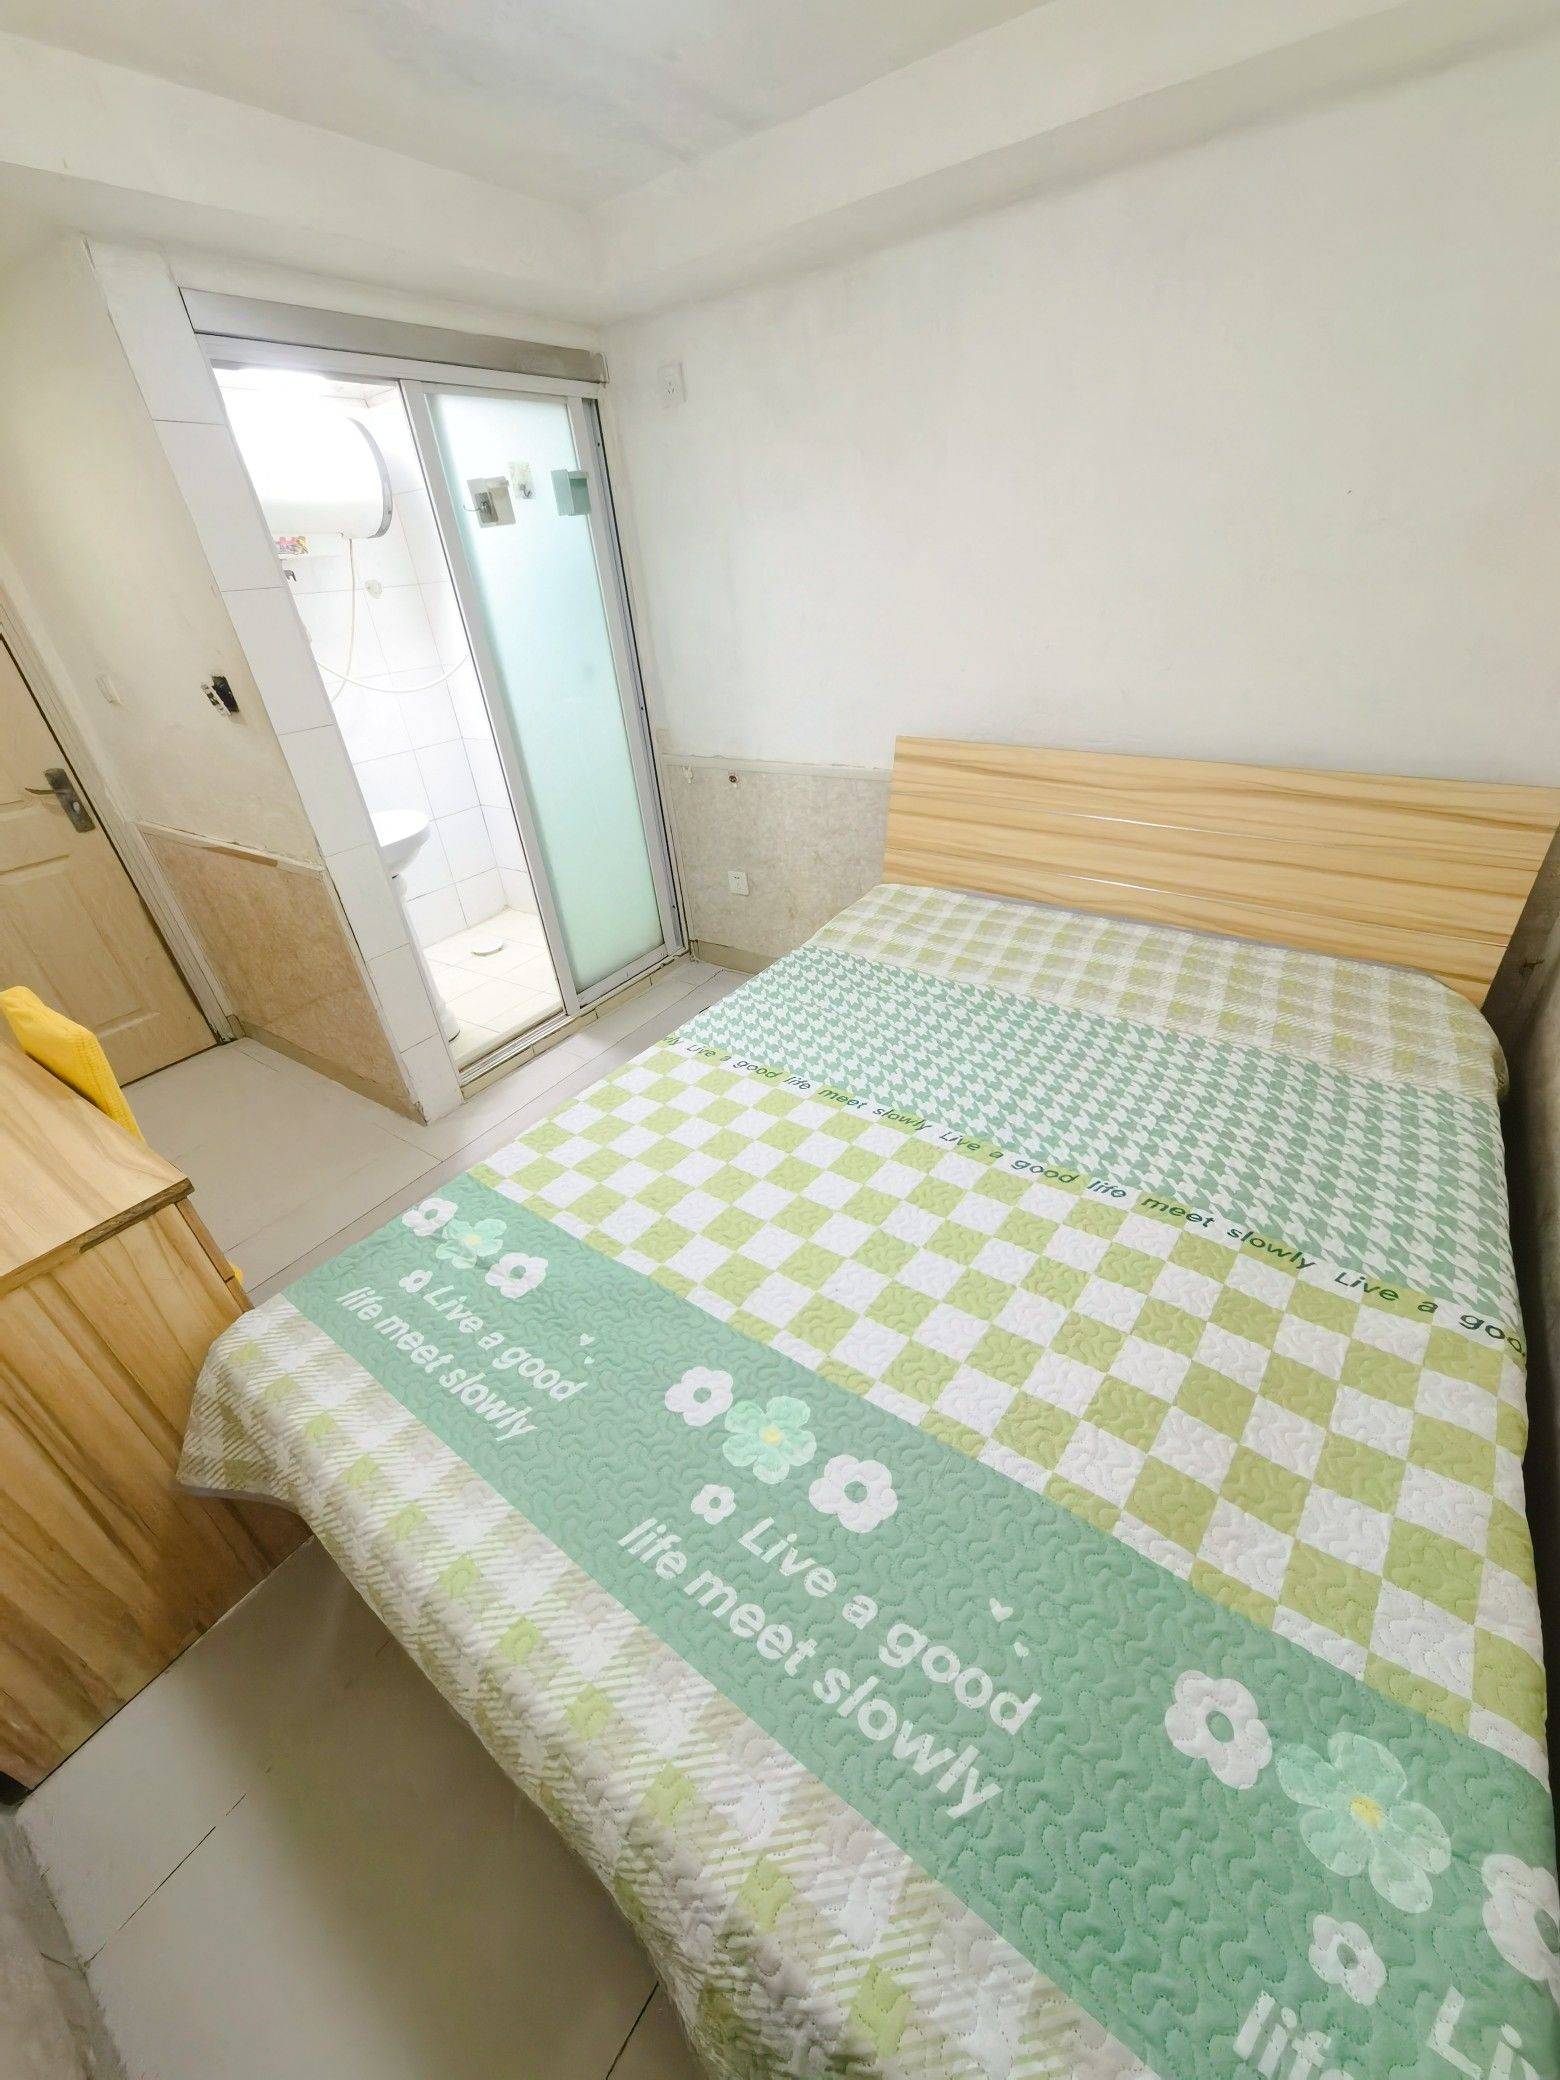 Qingdao-Shinan-Cozy Home,Clean&Comfy,No Gender Limit,Hustle & Bustle